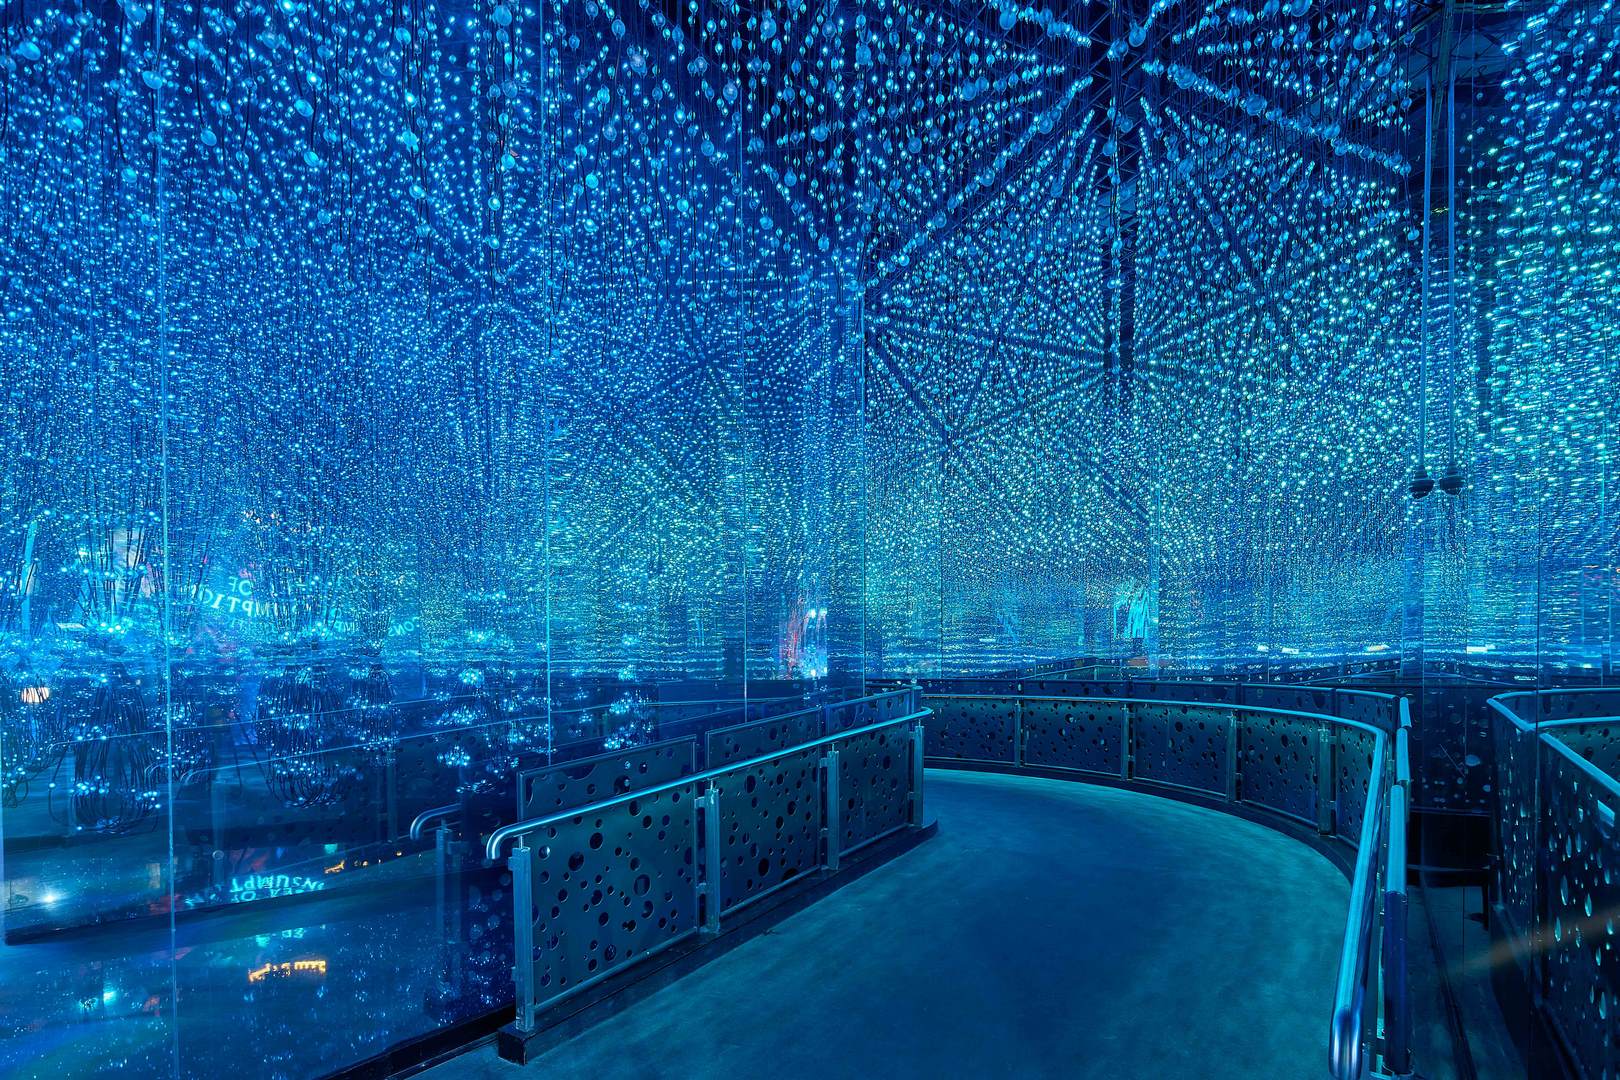 Terra Sustainable Development Pavilion opened on the eve of the World Exhibition EXPO 2020 Dubai